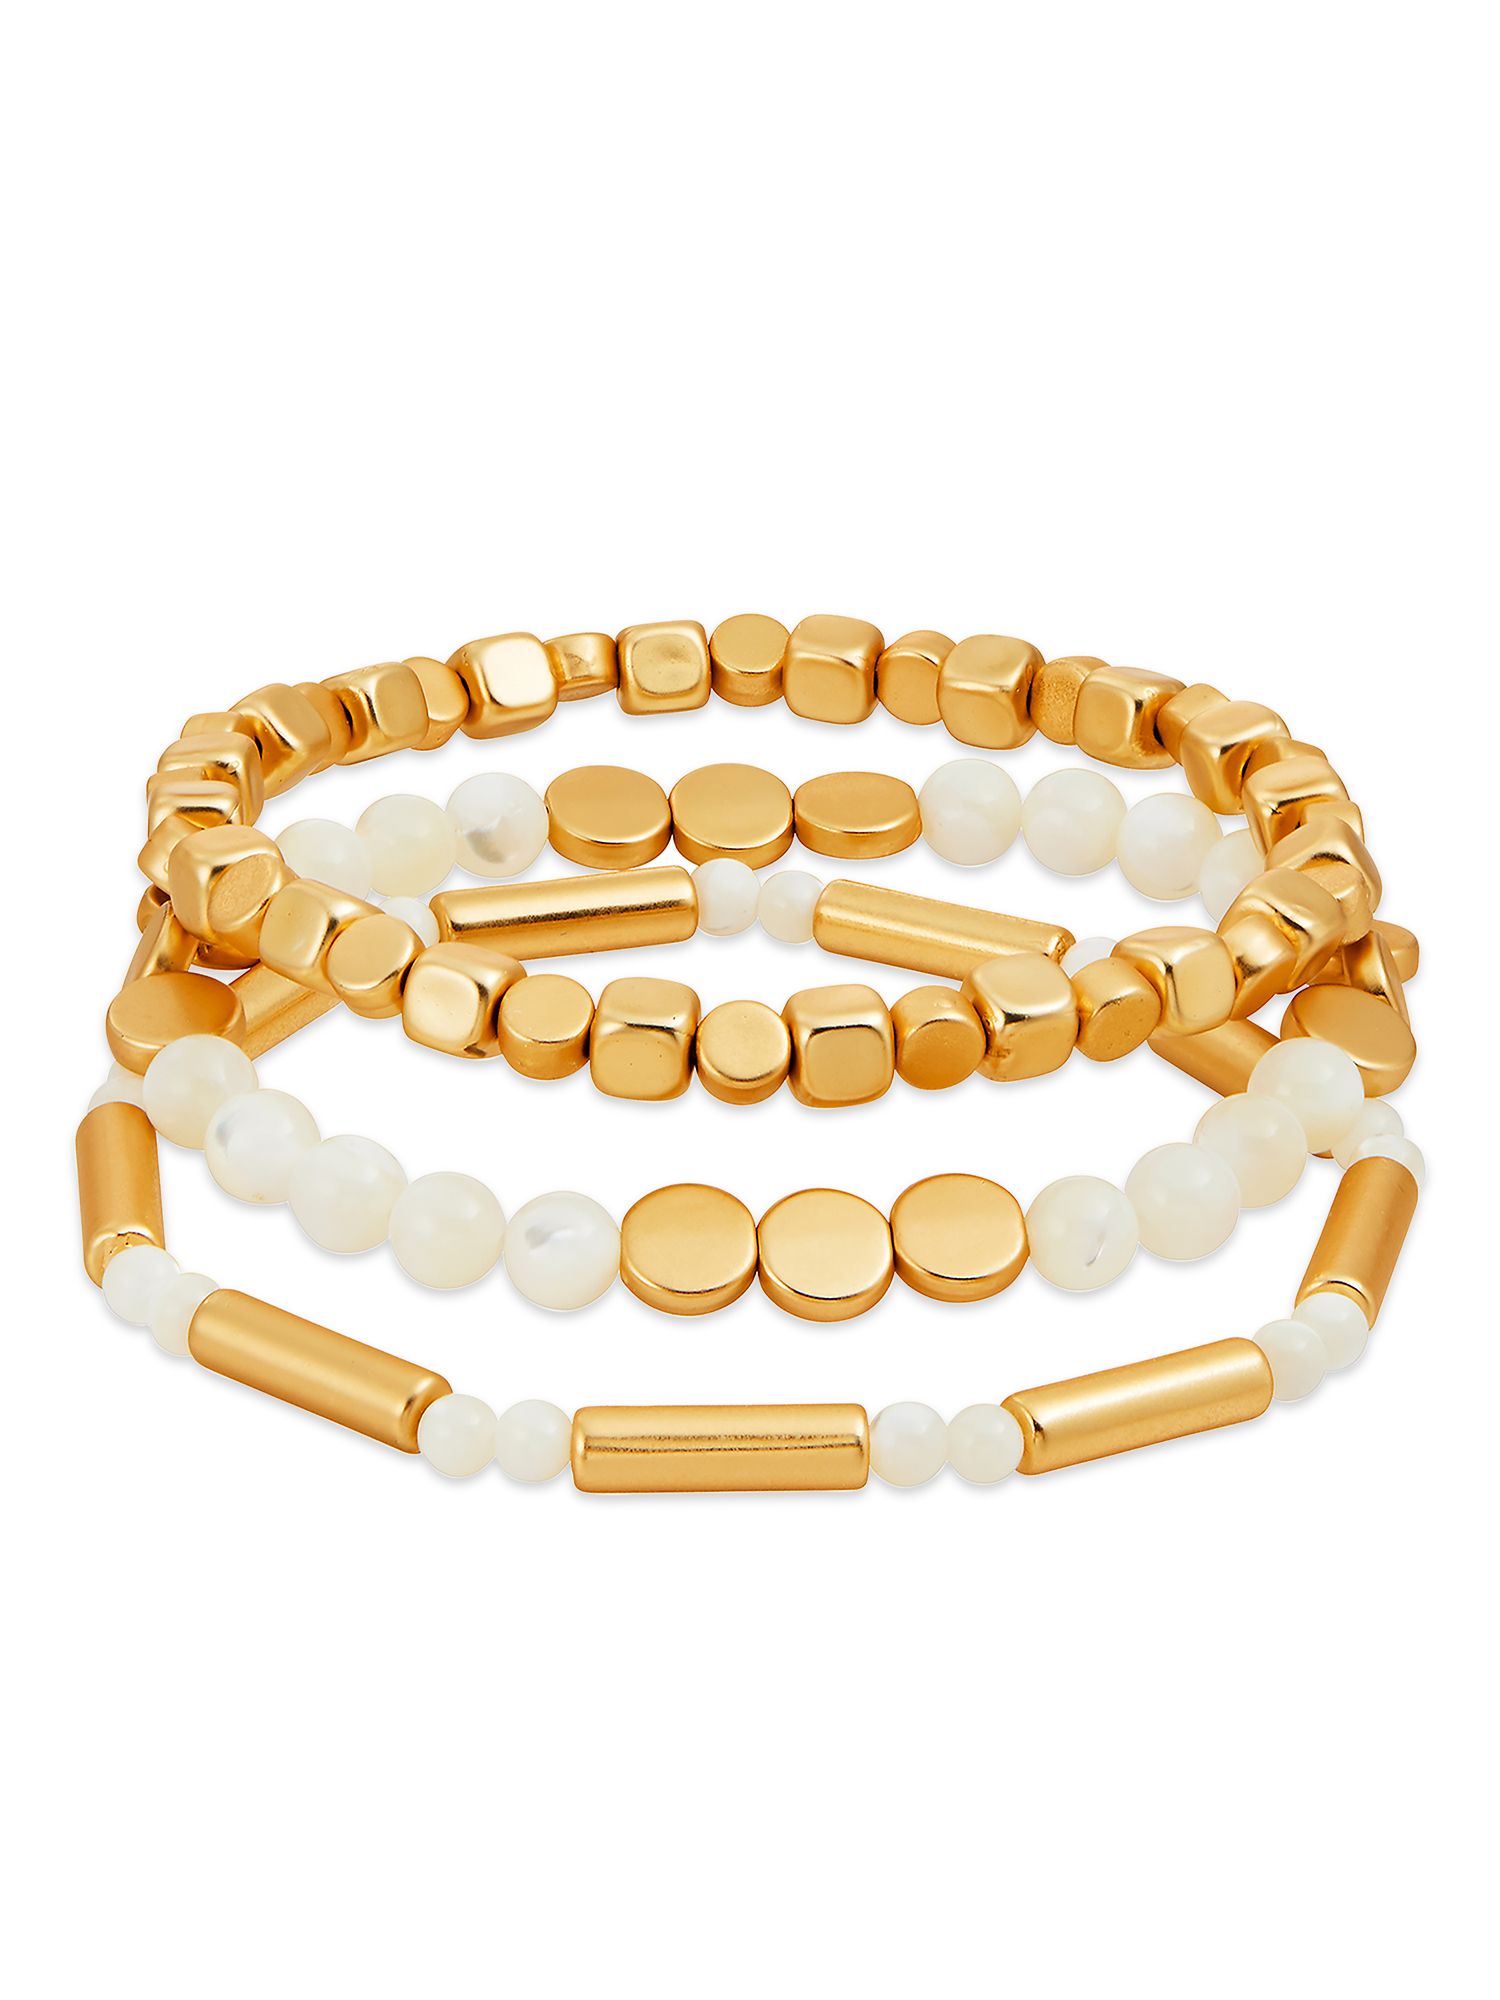 Scoop 14K Gold Flash-Plated Genuine Stone Bead Bracelet, 3-Piece Set, Adjustable | Walmart (US)